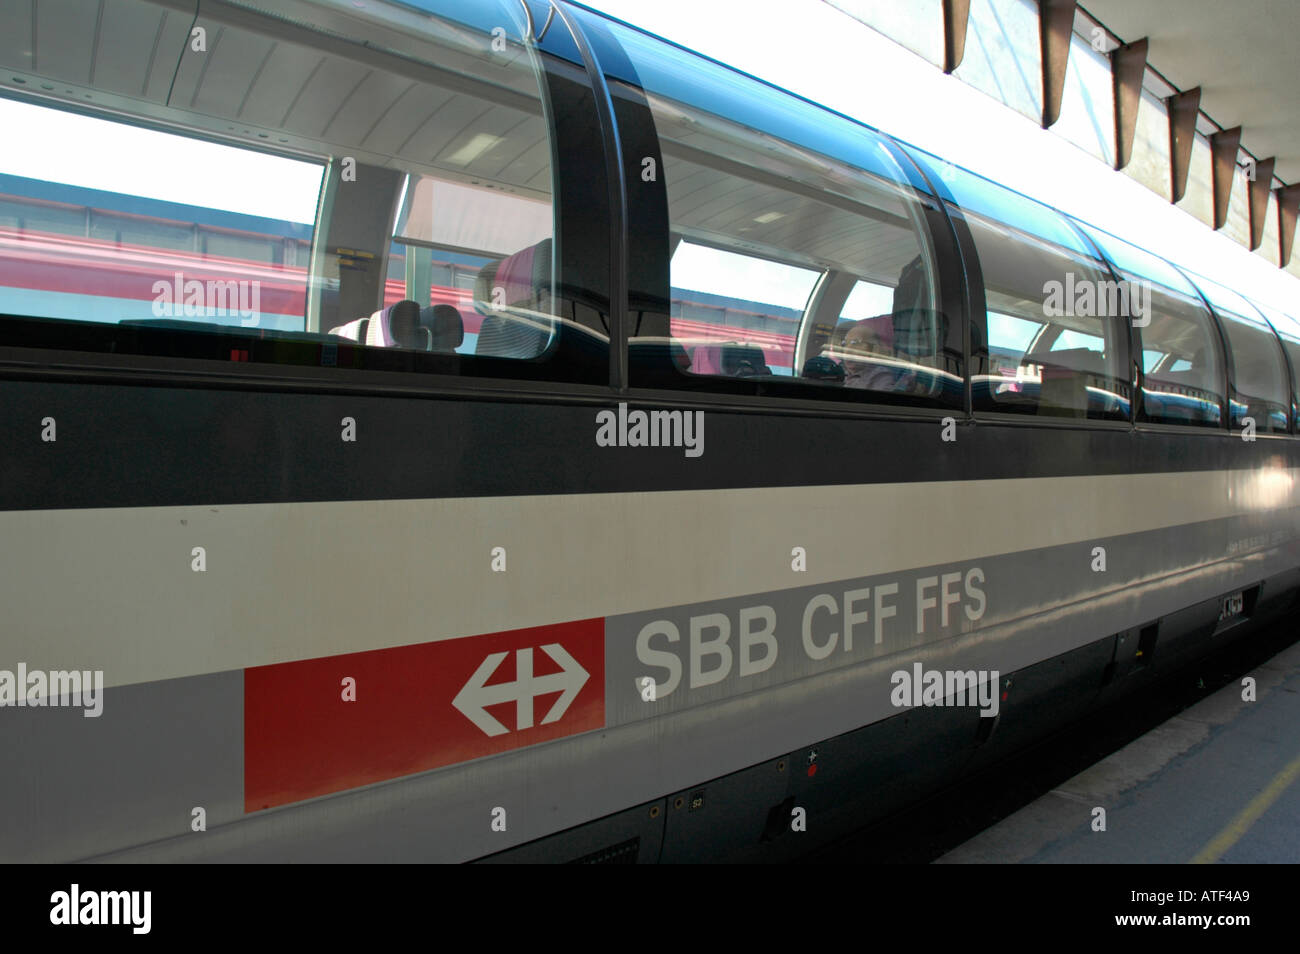 SBB CFF FFS, Swiss Federal Railway, modern waggon Stock Photo - Alamy